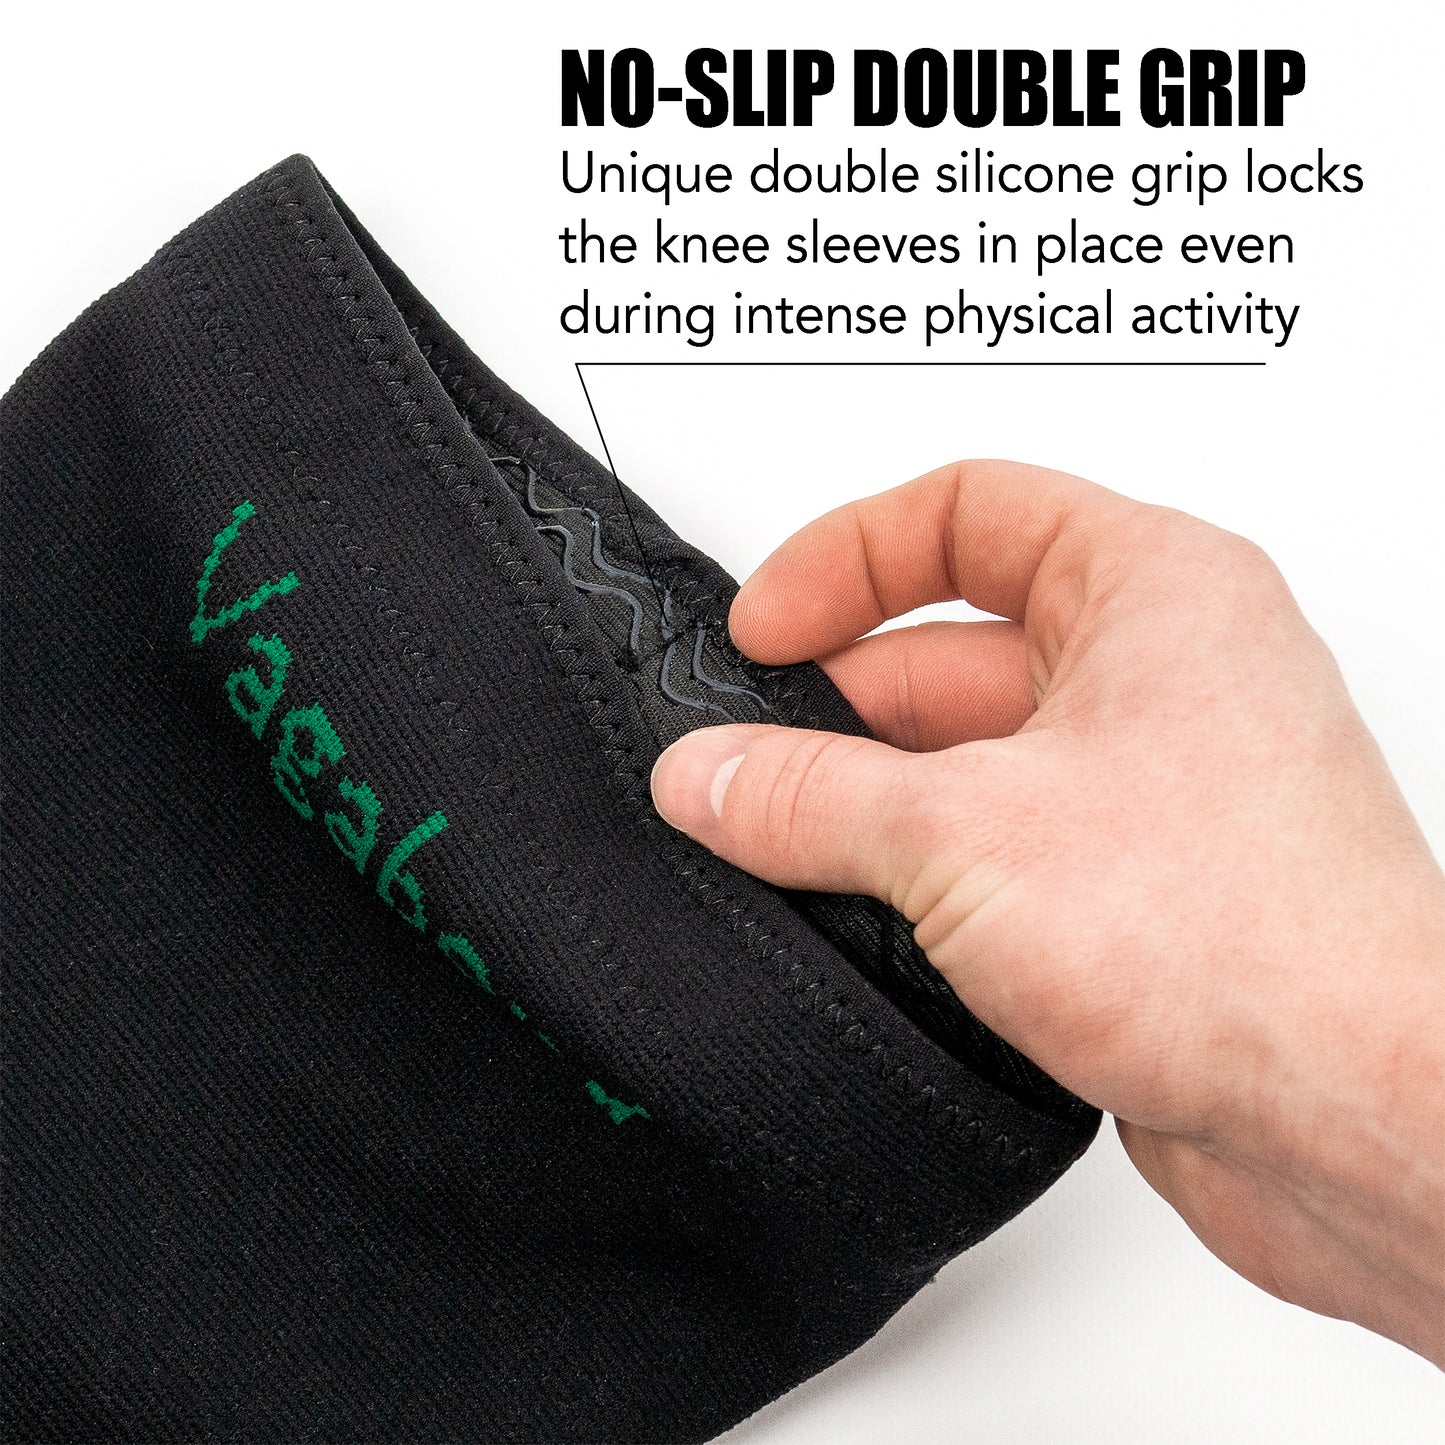 Vagabond Plus Size XL Compression Knee Sleeve (One Sleeve)